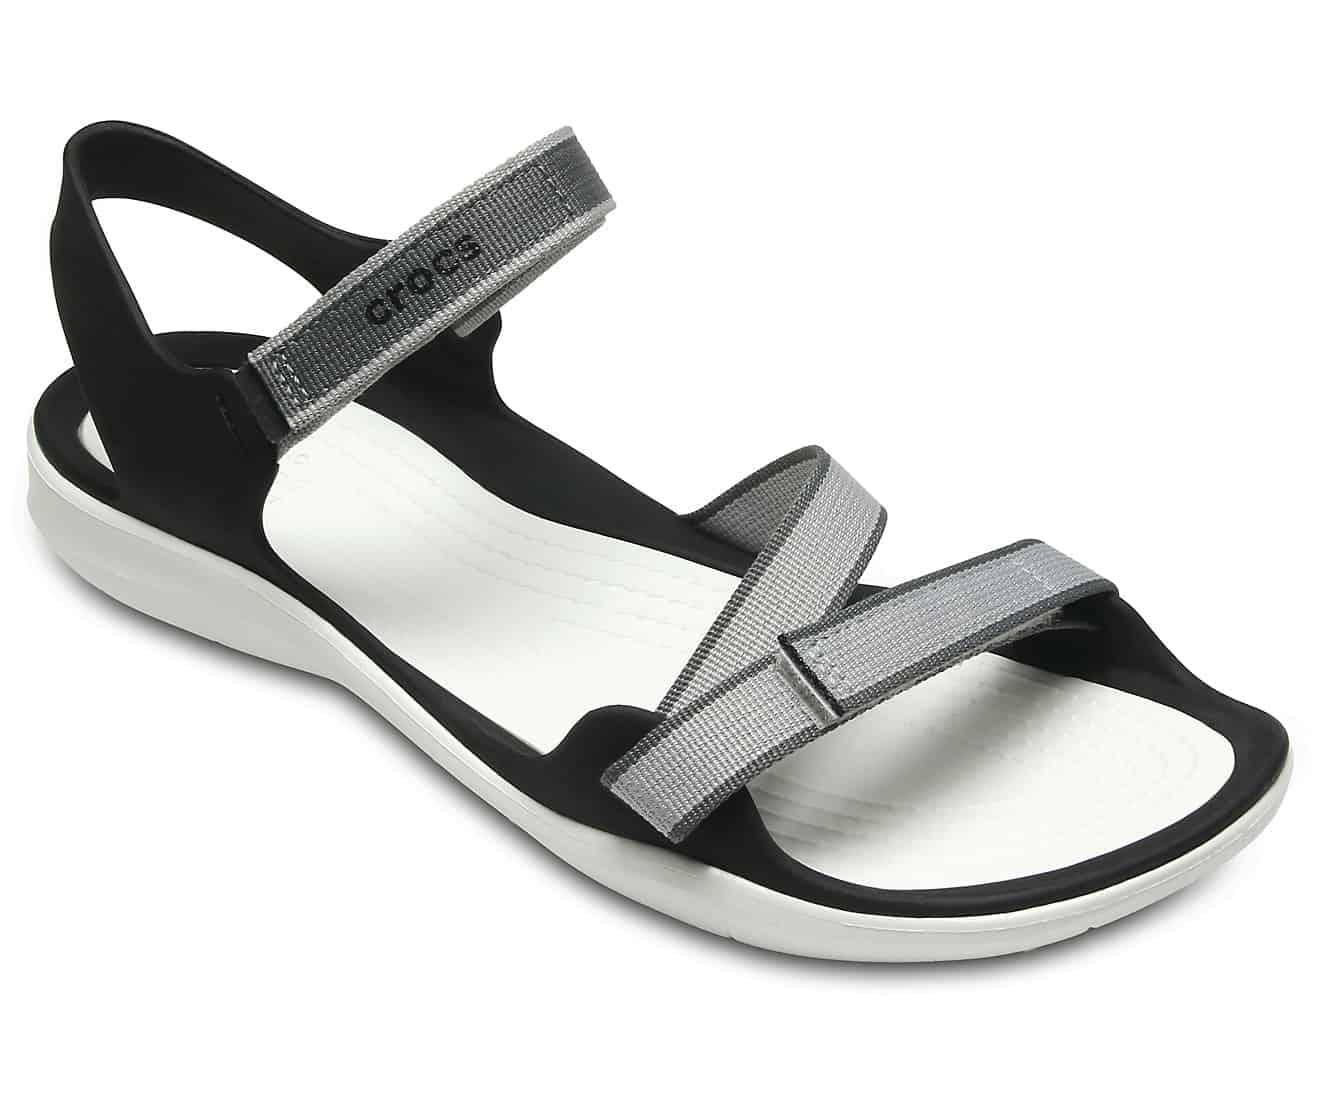 Sandals CROCS  Swiftwater Webbing Sandal W 204804 Black  Casual sandals   Sandals  Mules and sandals  Womens shoes  efootweareu